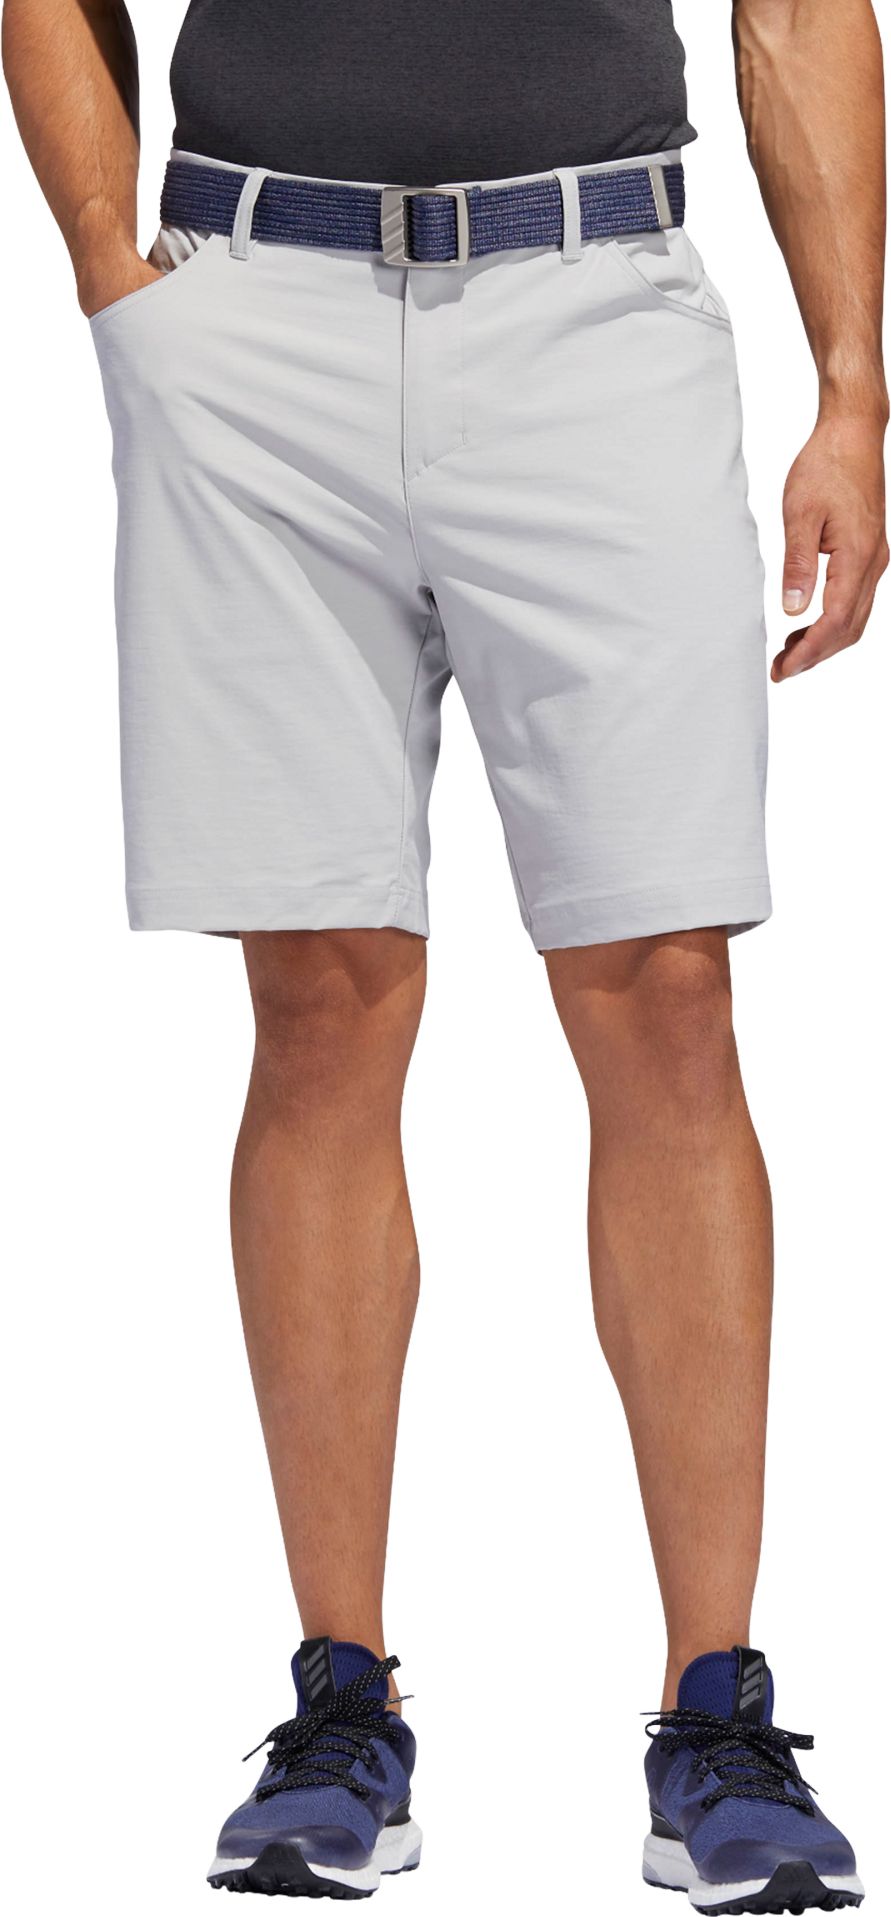 adicross shorts